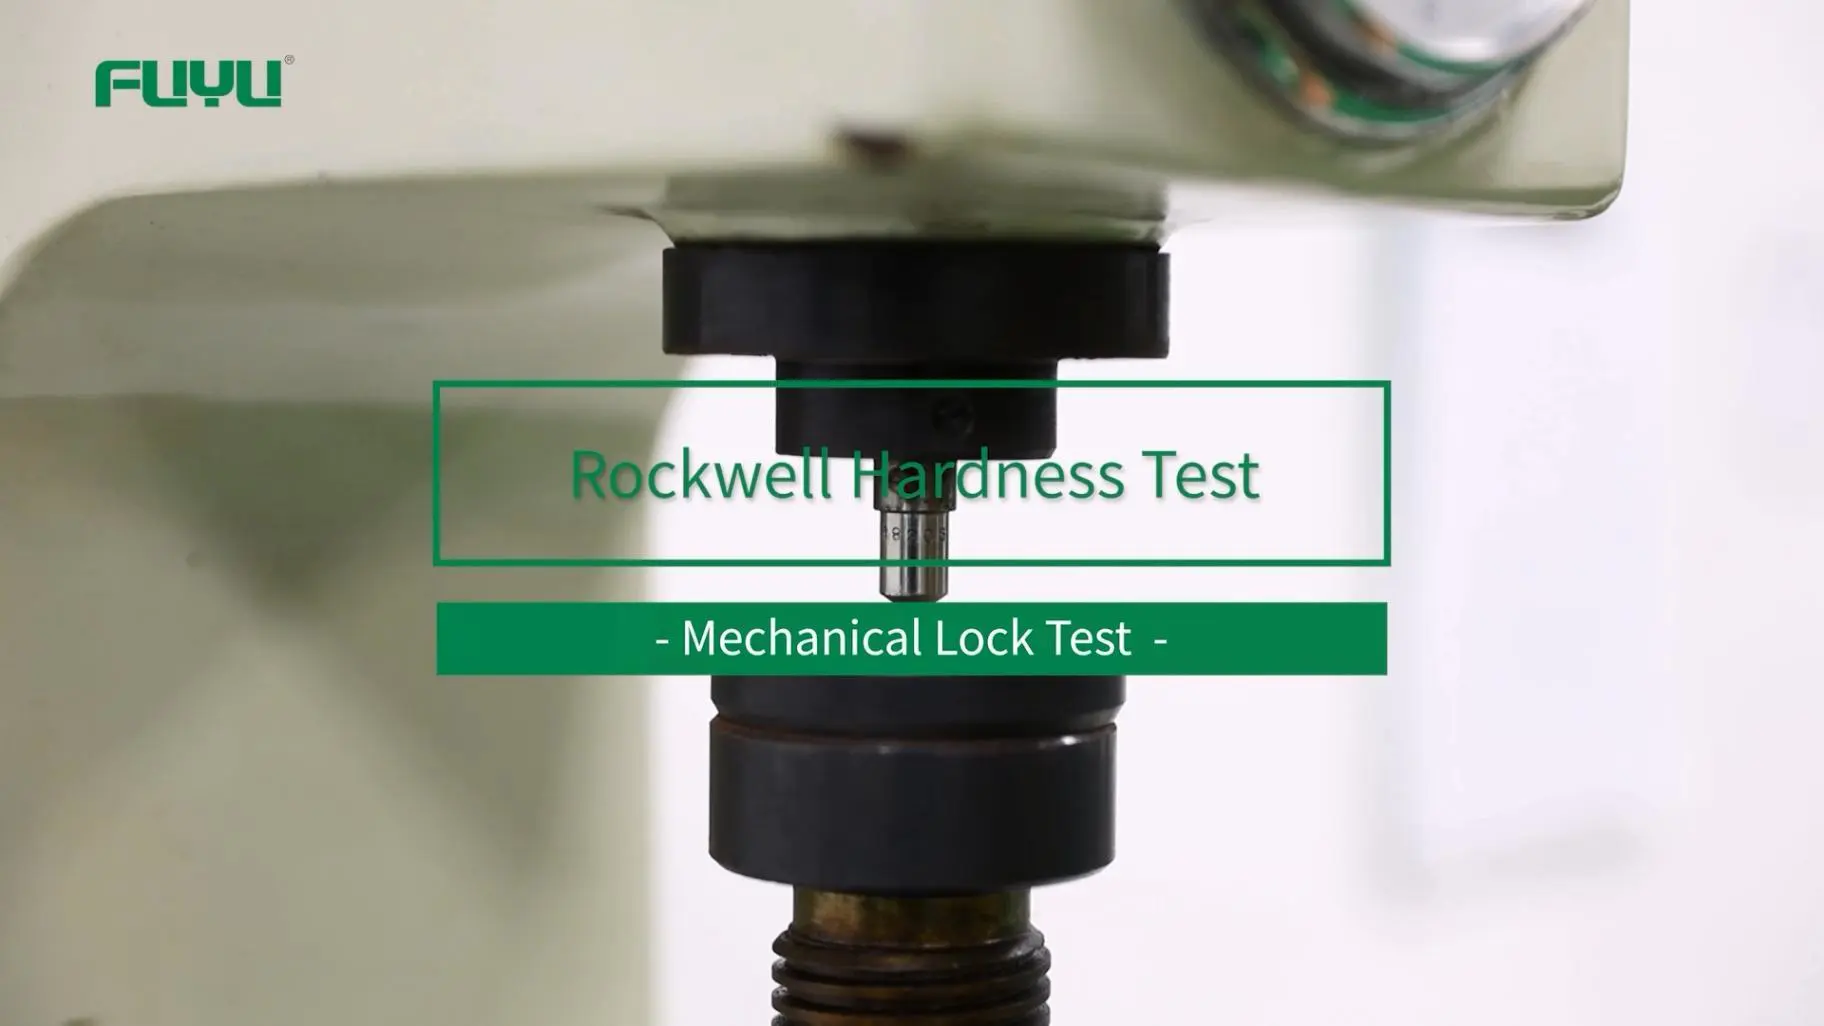 Rockwell Hardness Test of FUYU Mechanical Lock Tests